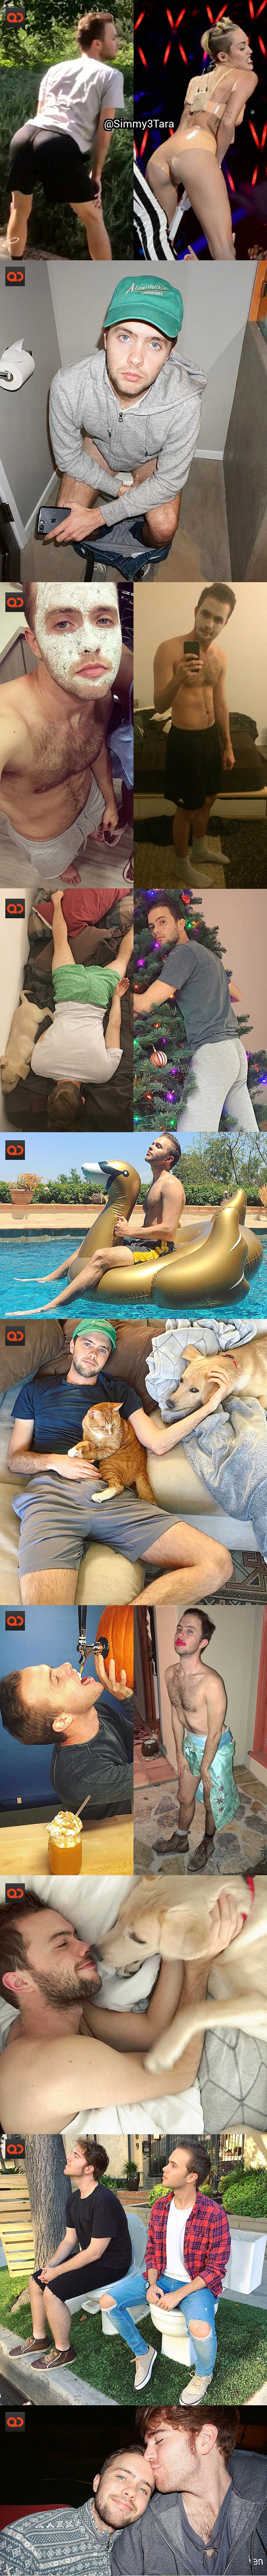 Ryland Adams, American Actor, Exposed Big Cock In Leaked Snapchat Photo!